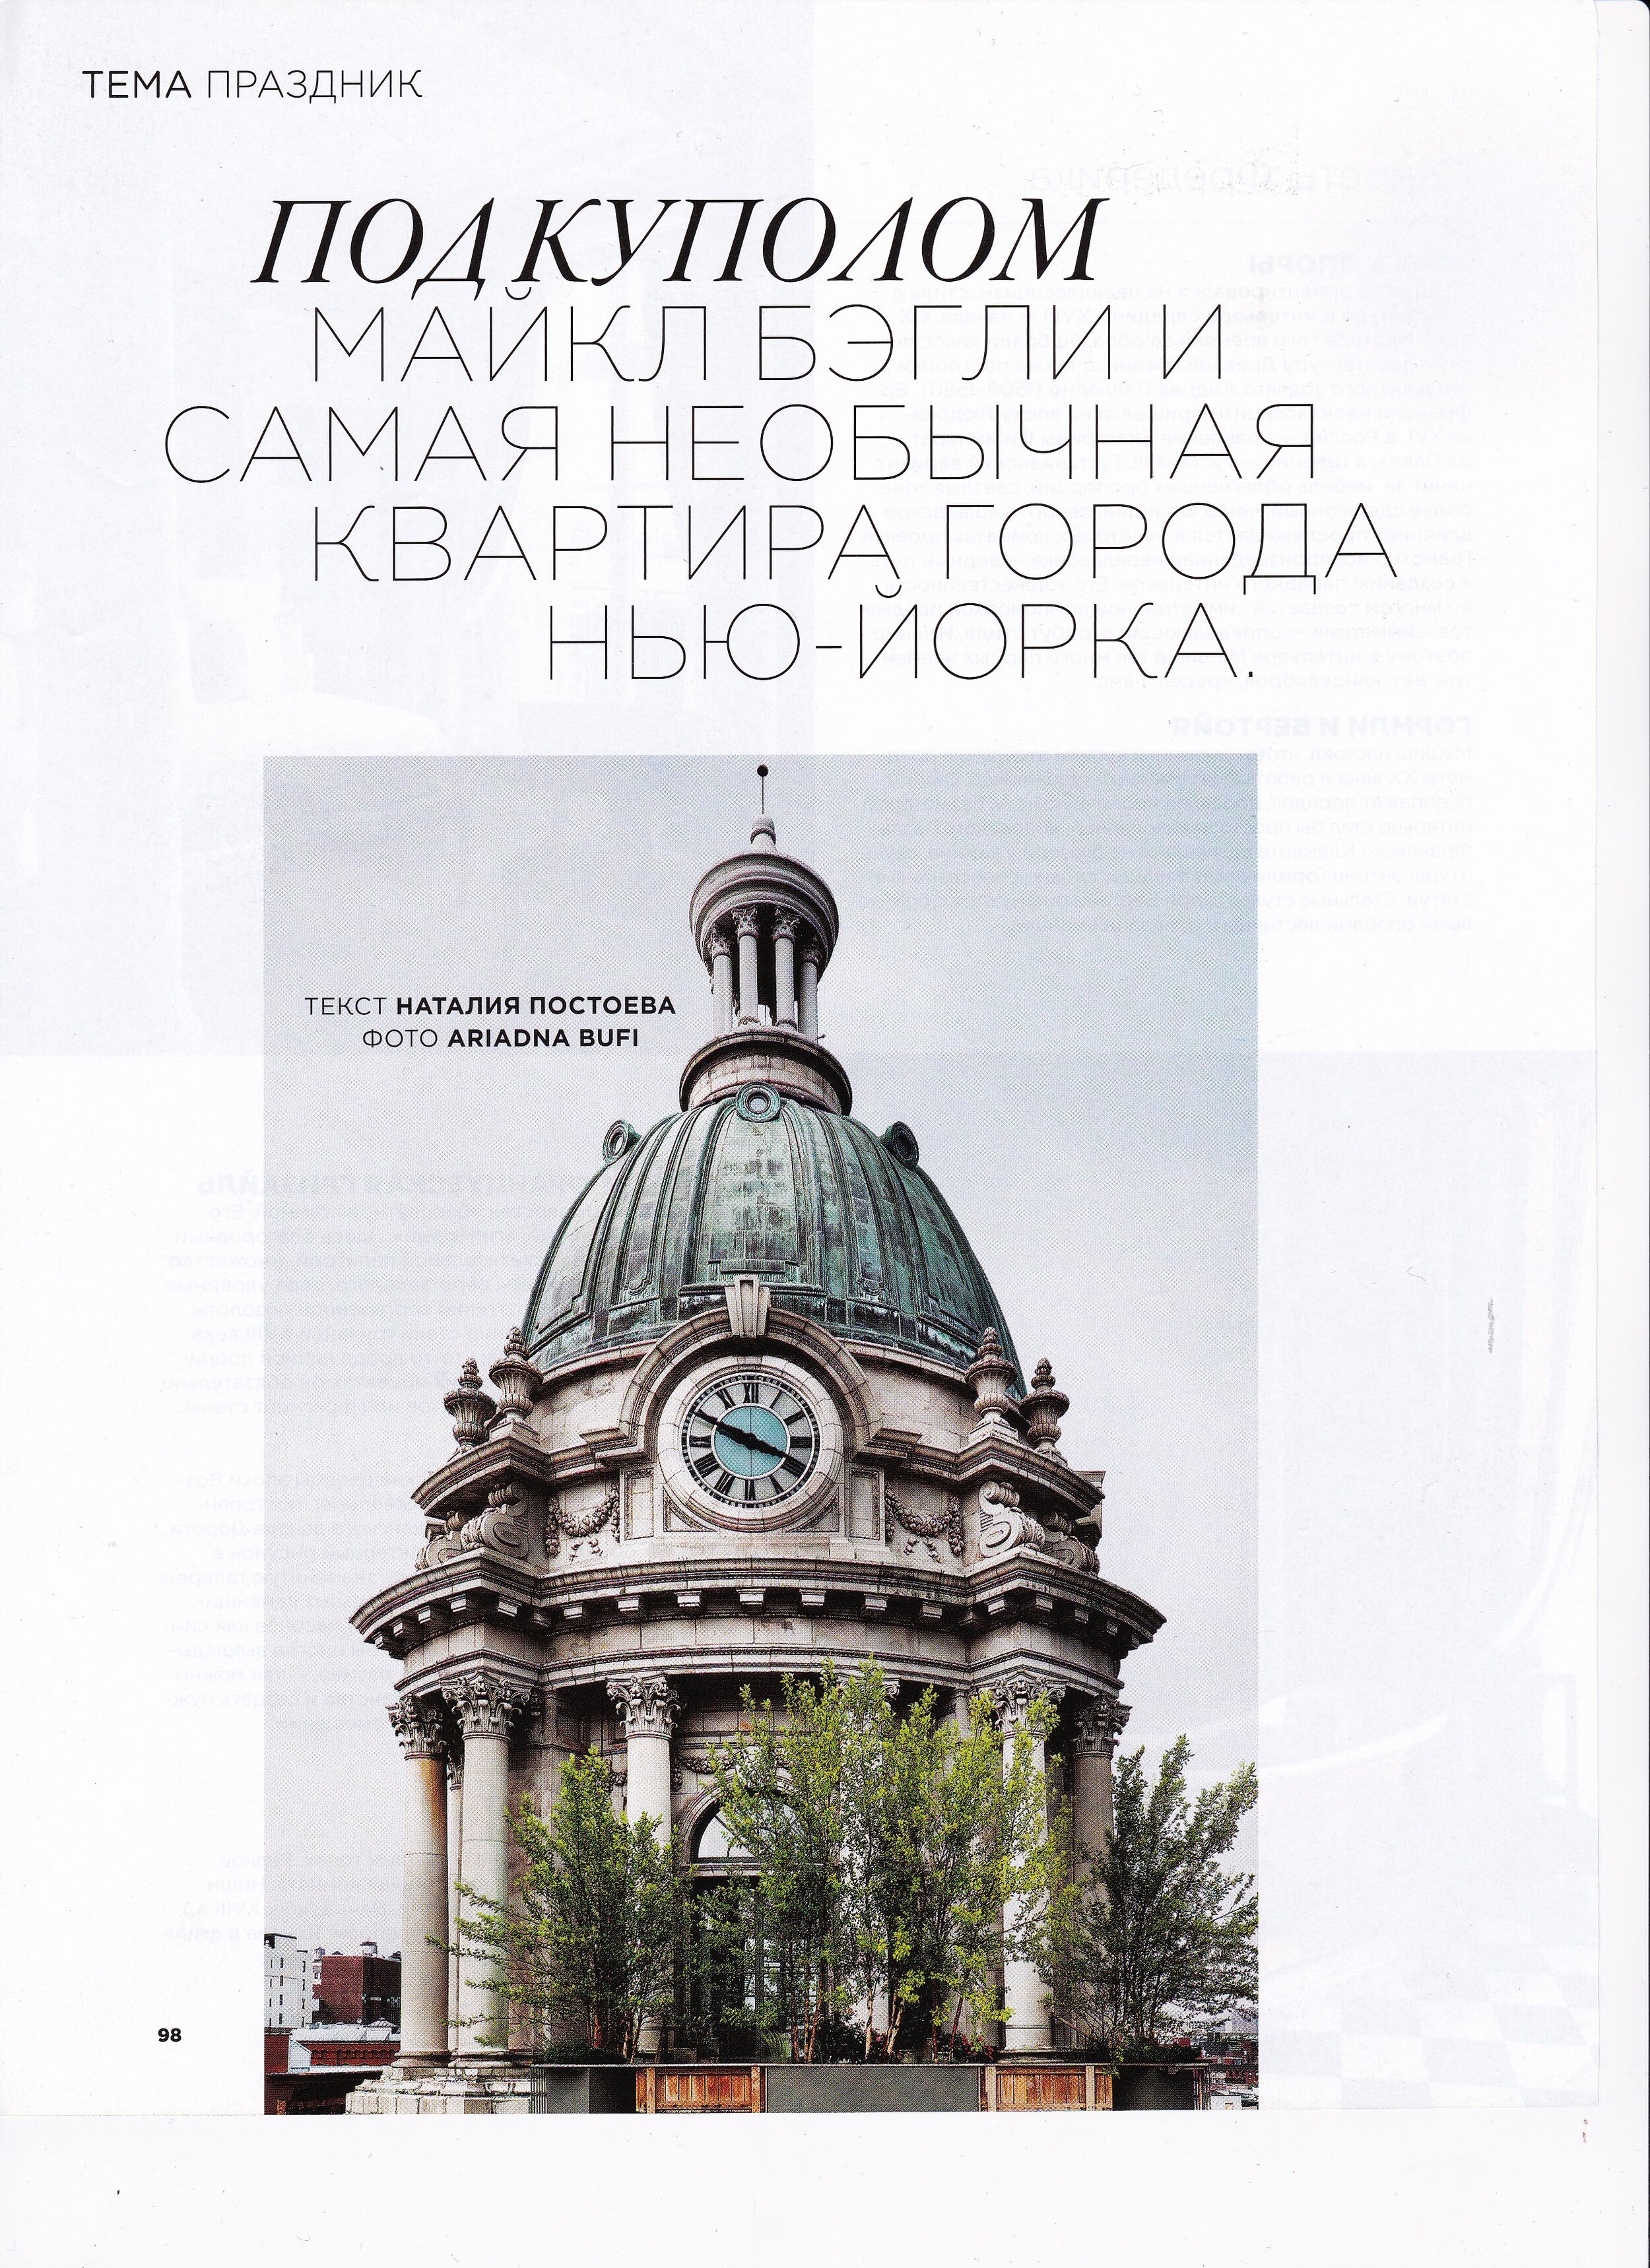 INTERIOR Magazine - RUSSIAN - EXCERPT.jpg